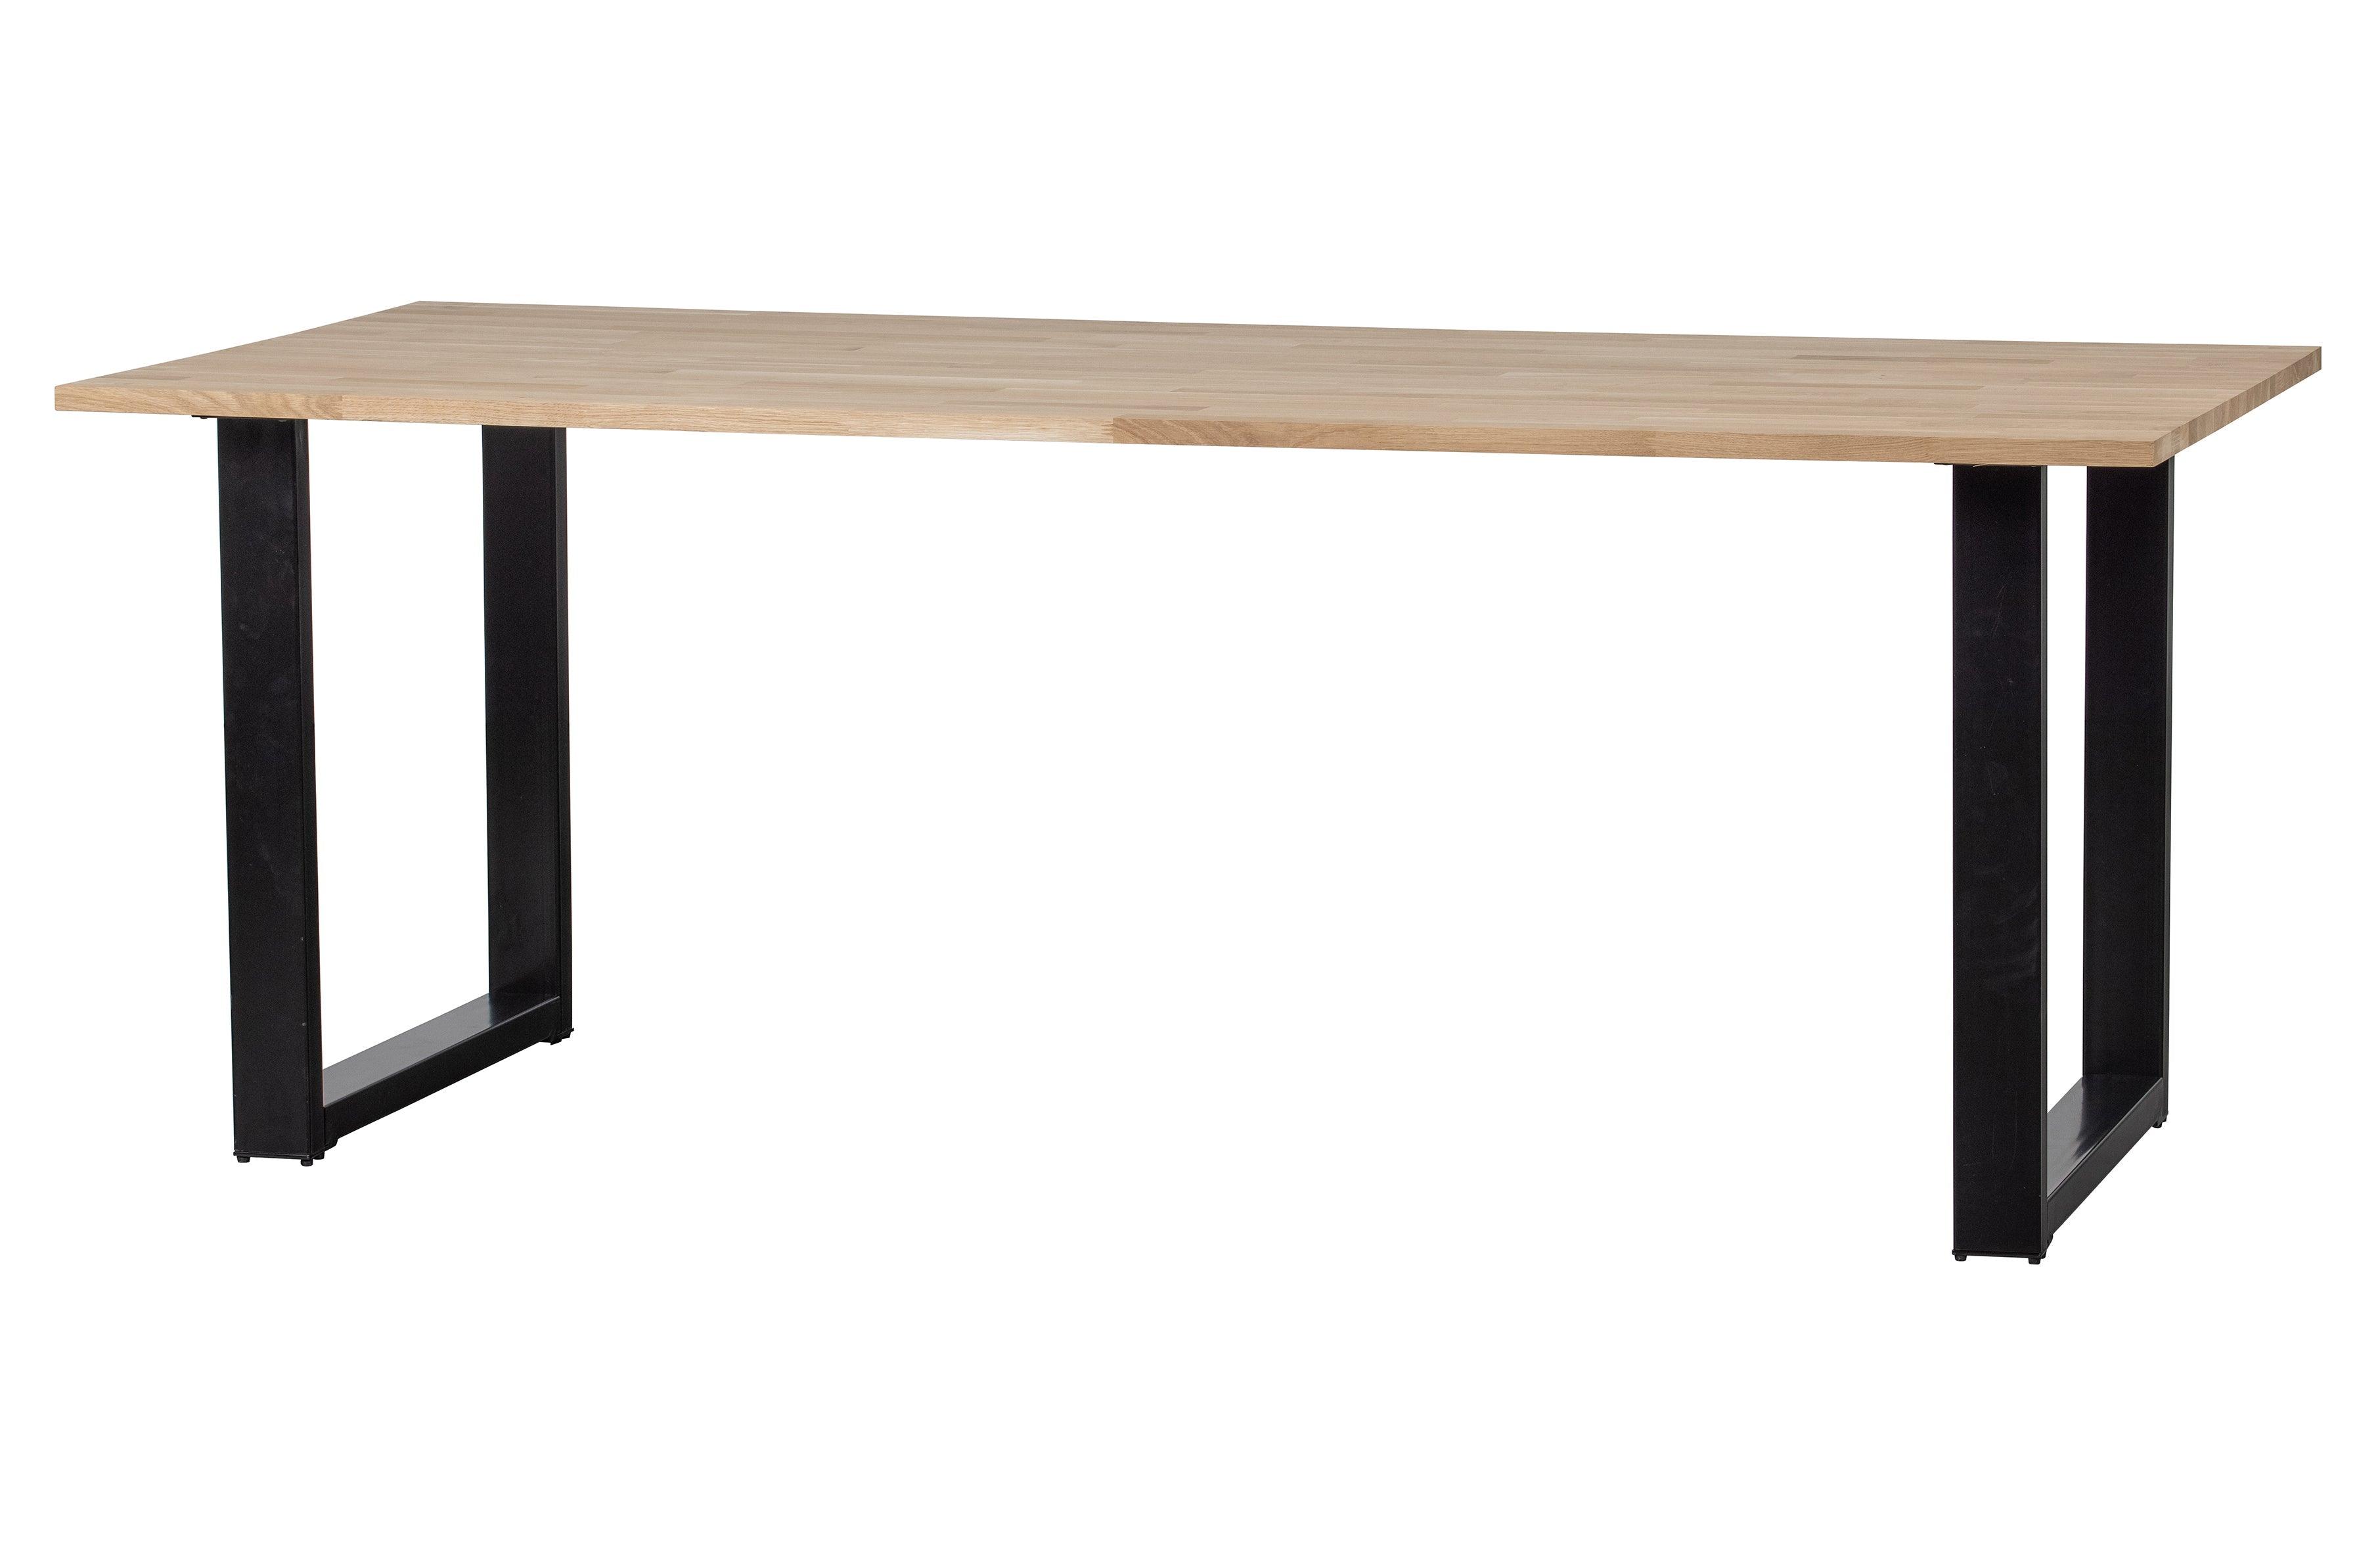 Table Table Oak 220x90 [FSC] U-LEG - PARIS14A.RO